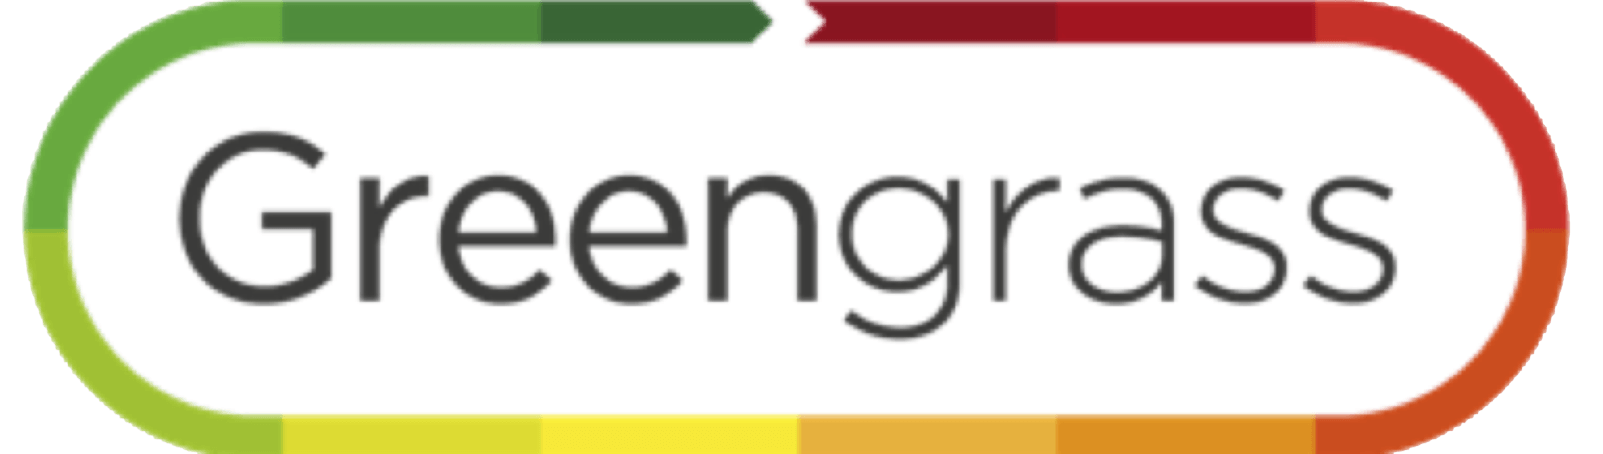 Greengrass Logo - Driving High Performance